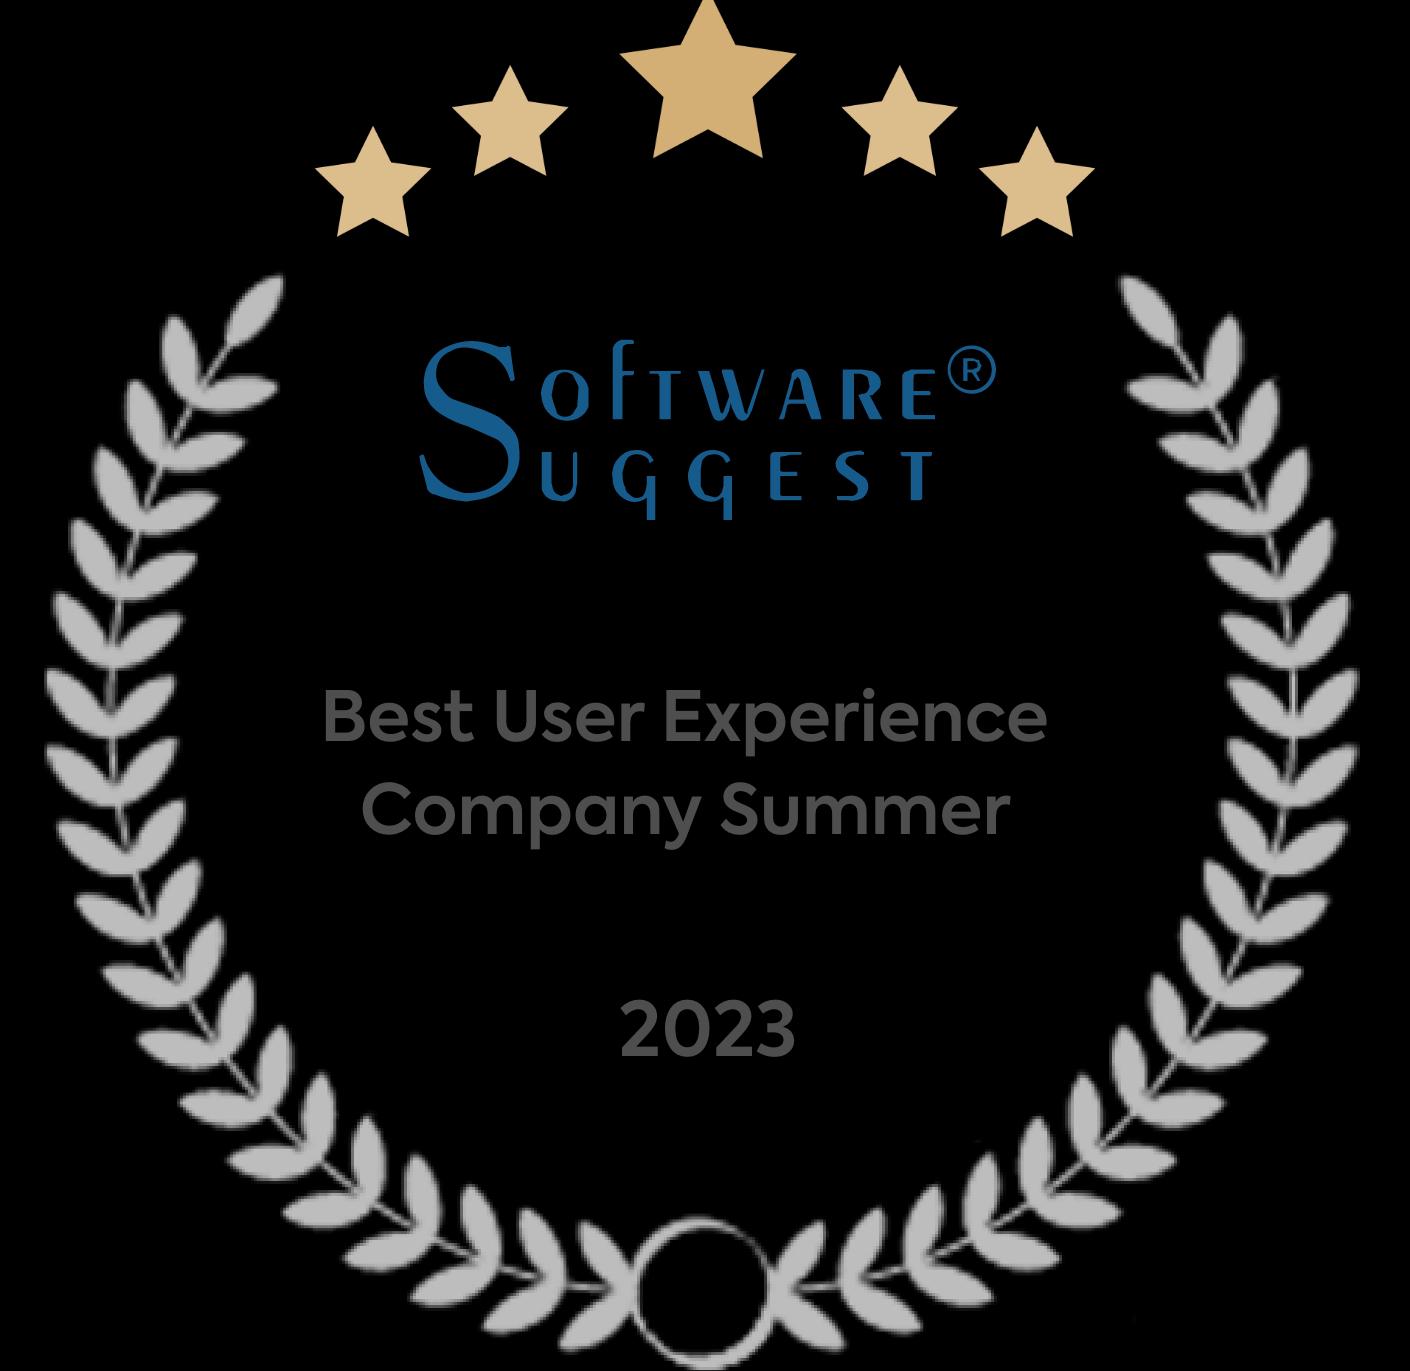 software-suggest-award